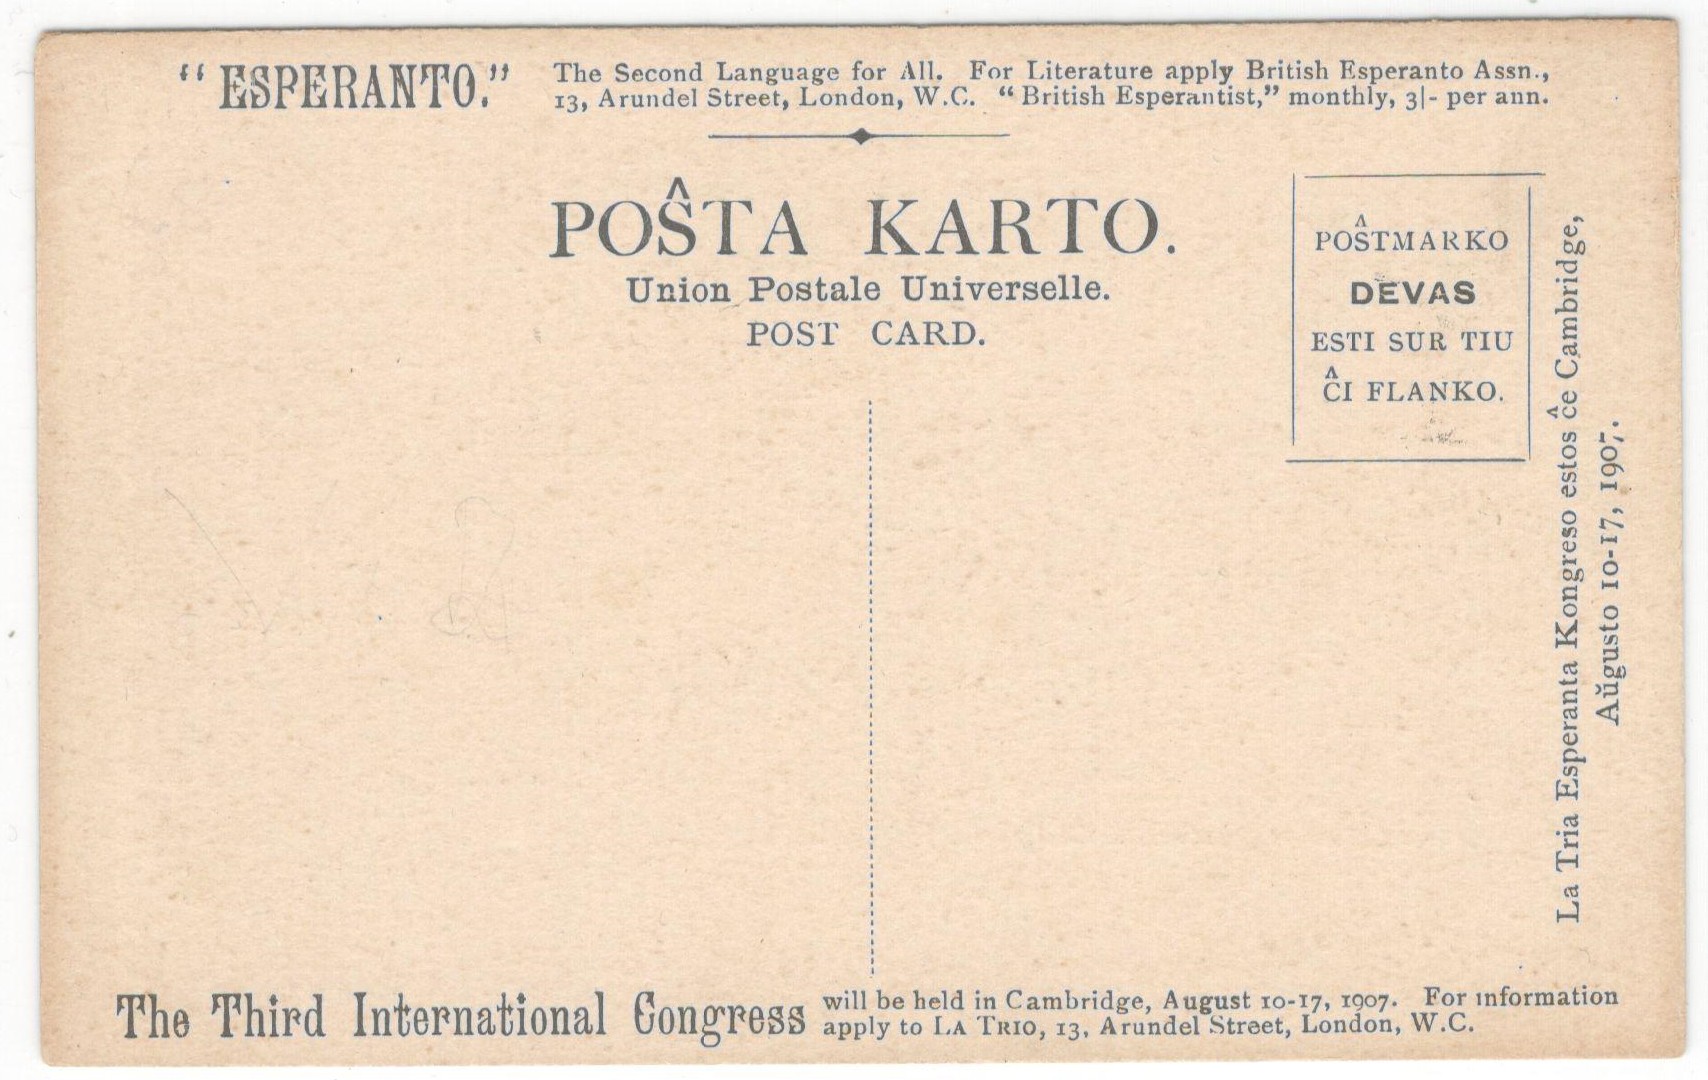 THE THIRD INTERNATIONAL CONGRESS - ESPERANTO POSTCARD 1907 - Image 2 of 2